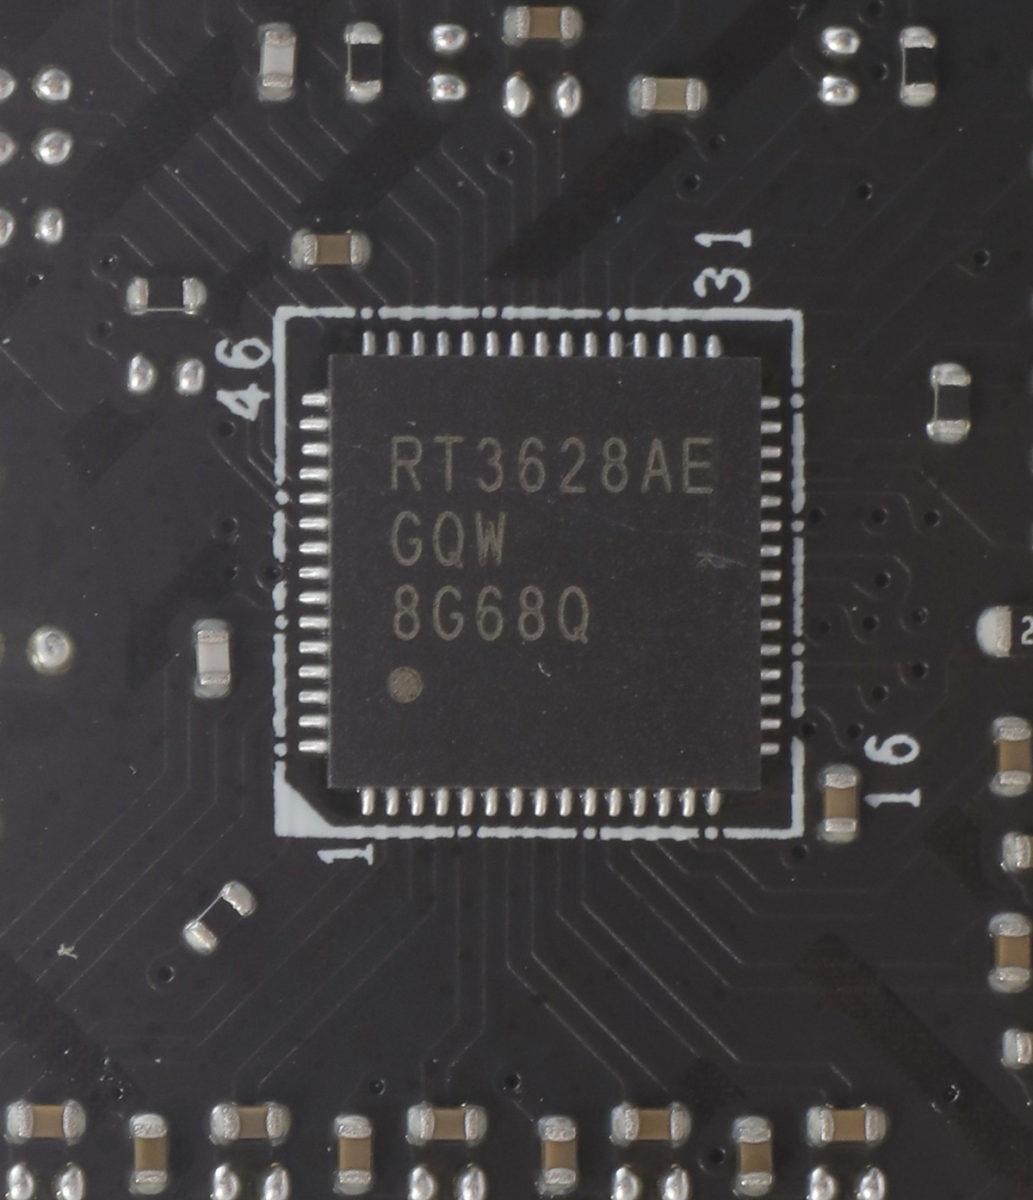 CPU供電採用較平價的 Richtek RT3628AE PWM 晶片及一般 DrMOS 晶片以降低成本。